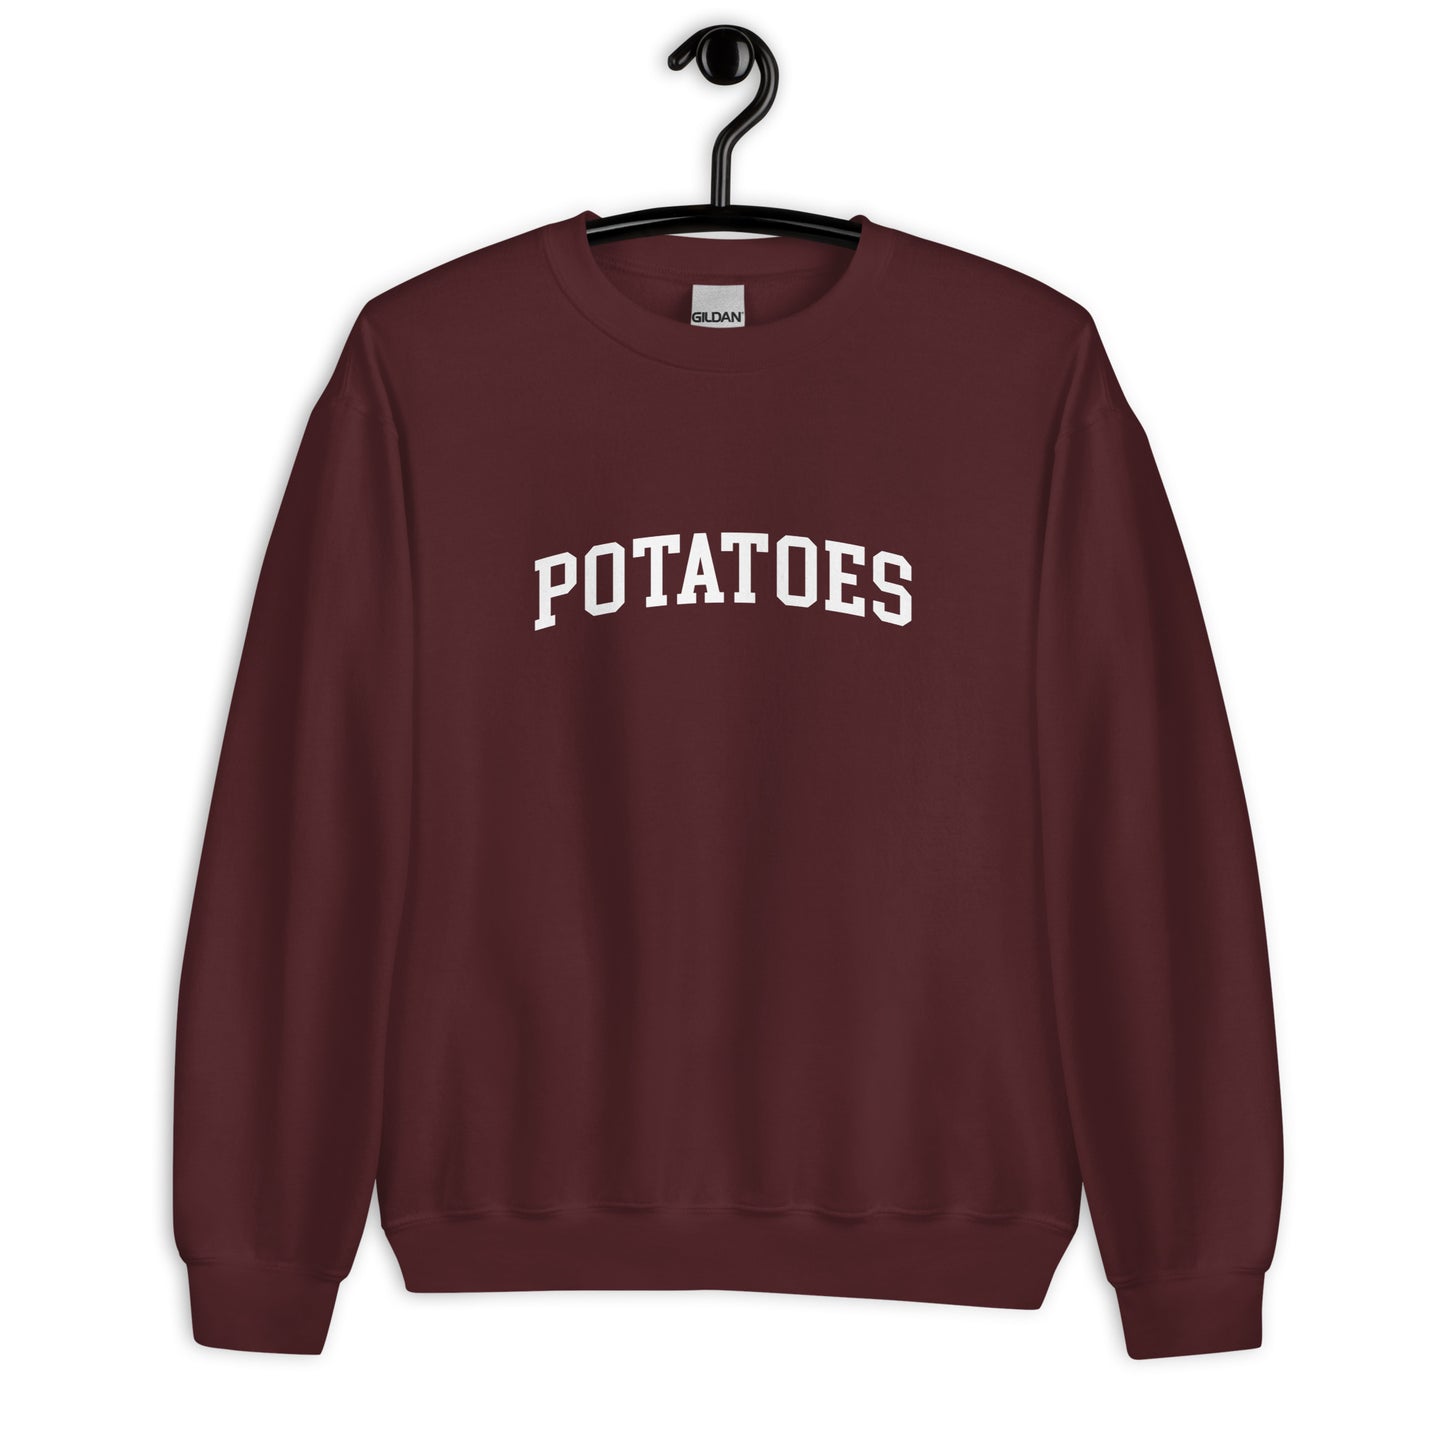 Potatoes Sweatshirt - Arched Font